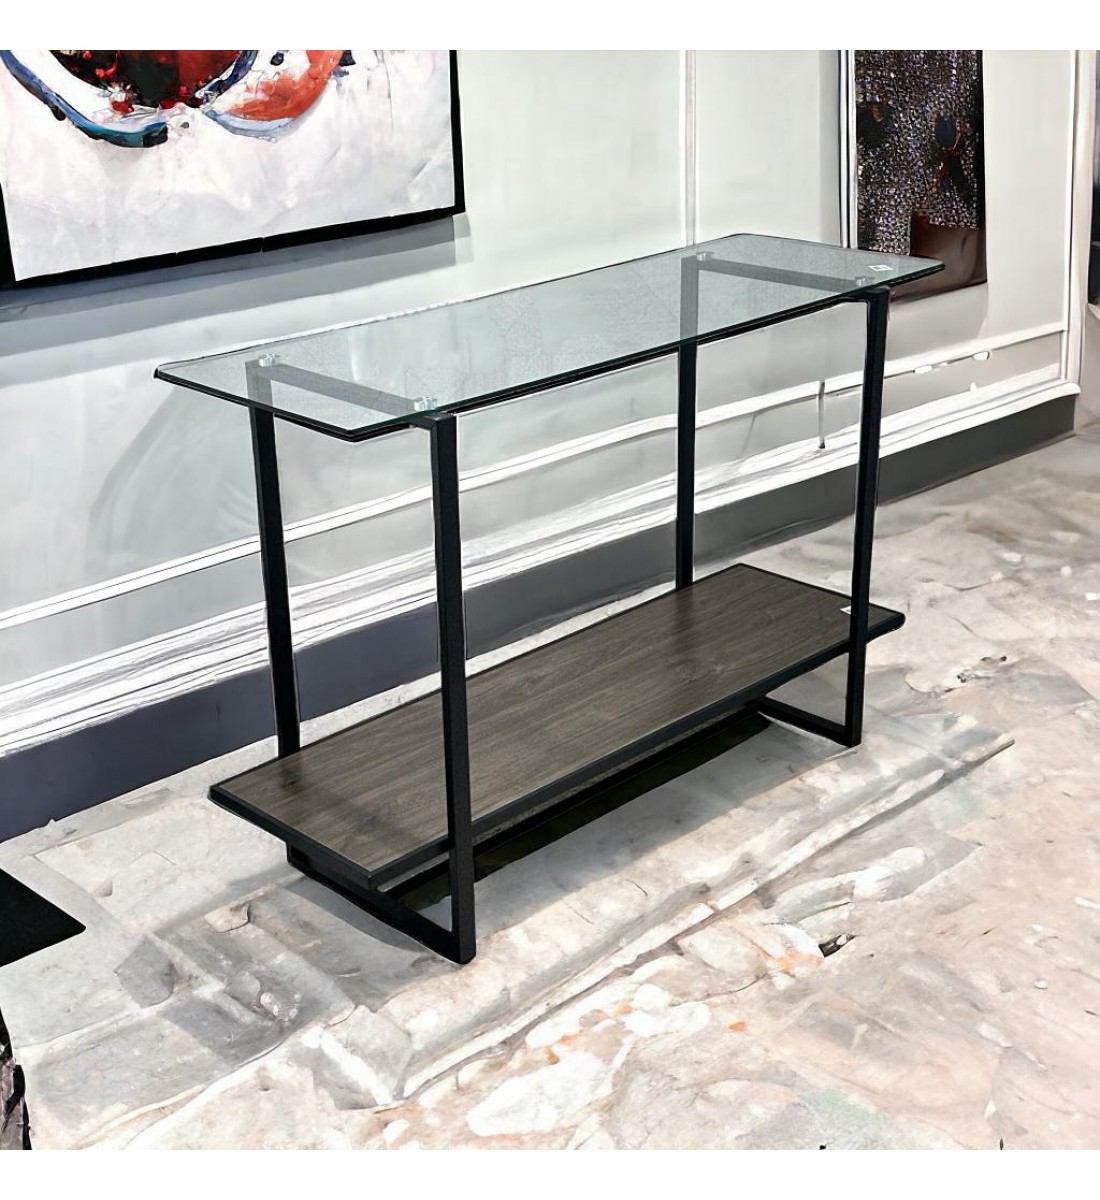 طاولة مدخل معدن و خشب ام دي اف و سطح زجاج بني و اسود - 40×120×80 سم